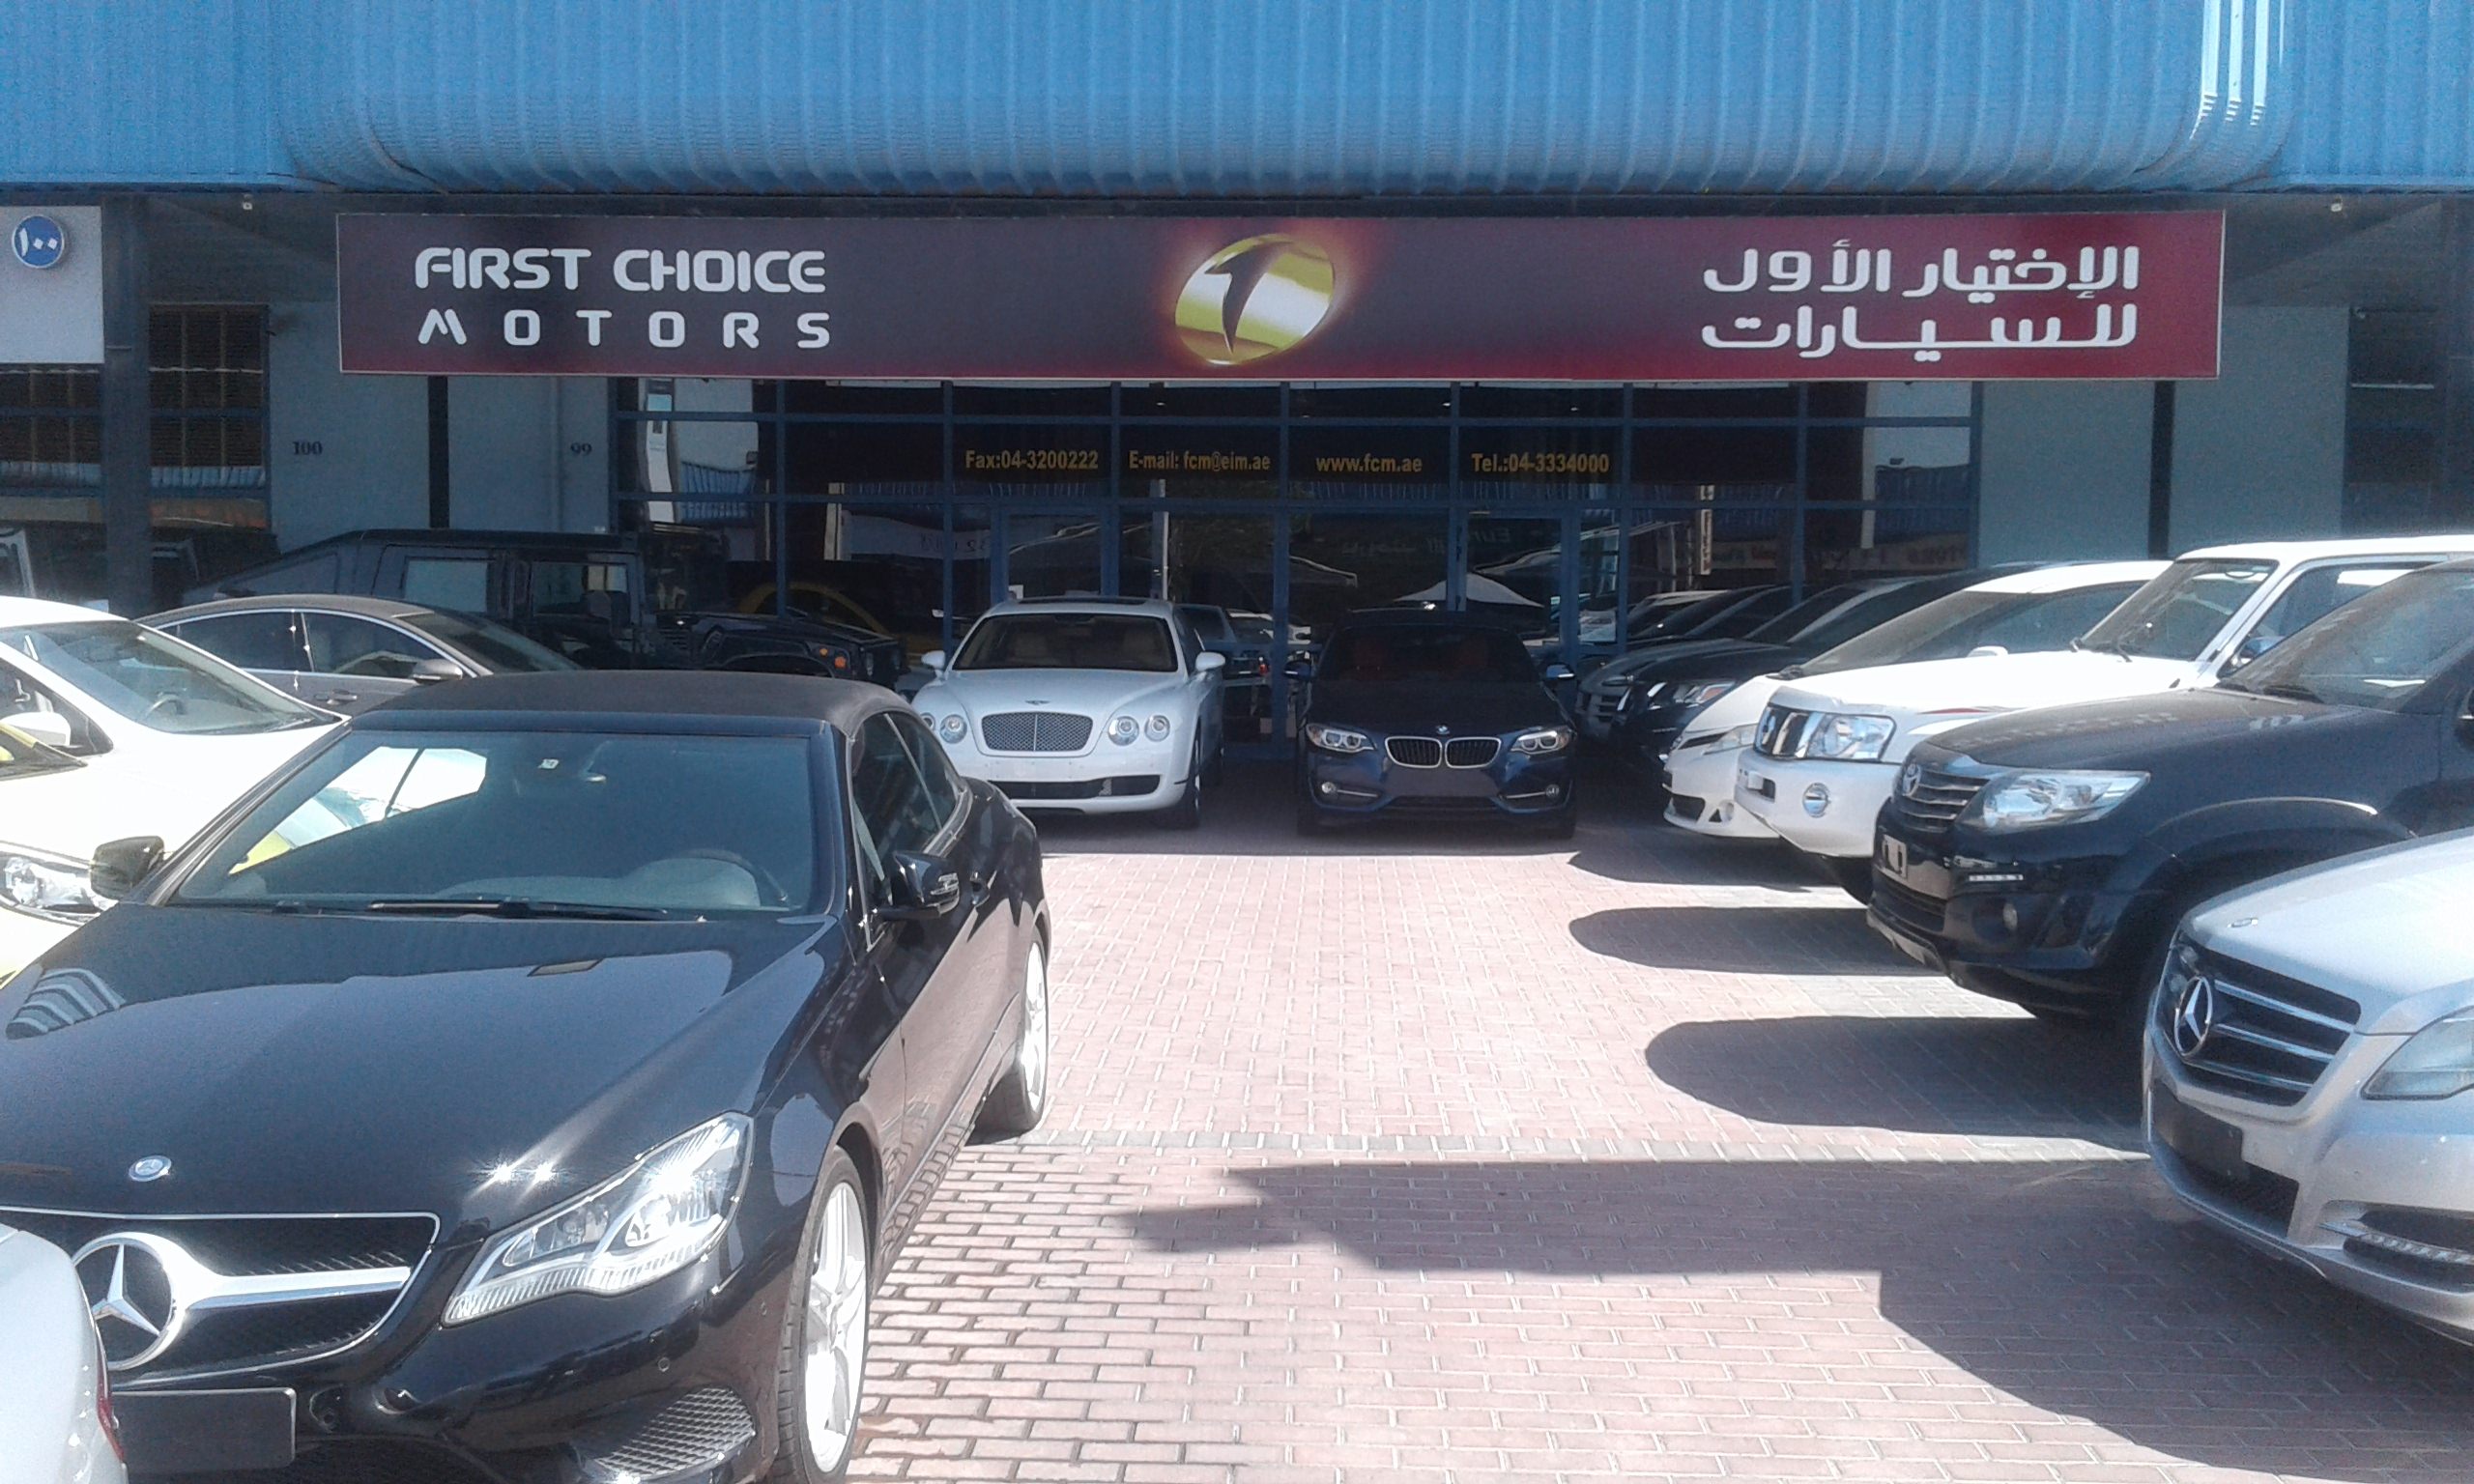 Best Choice Motors, Used Car Dealership